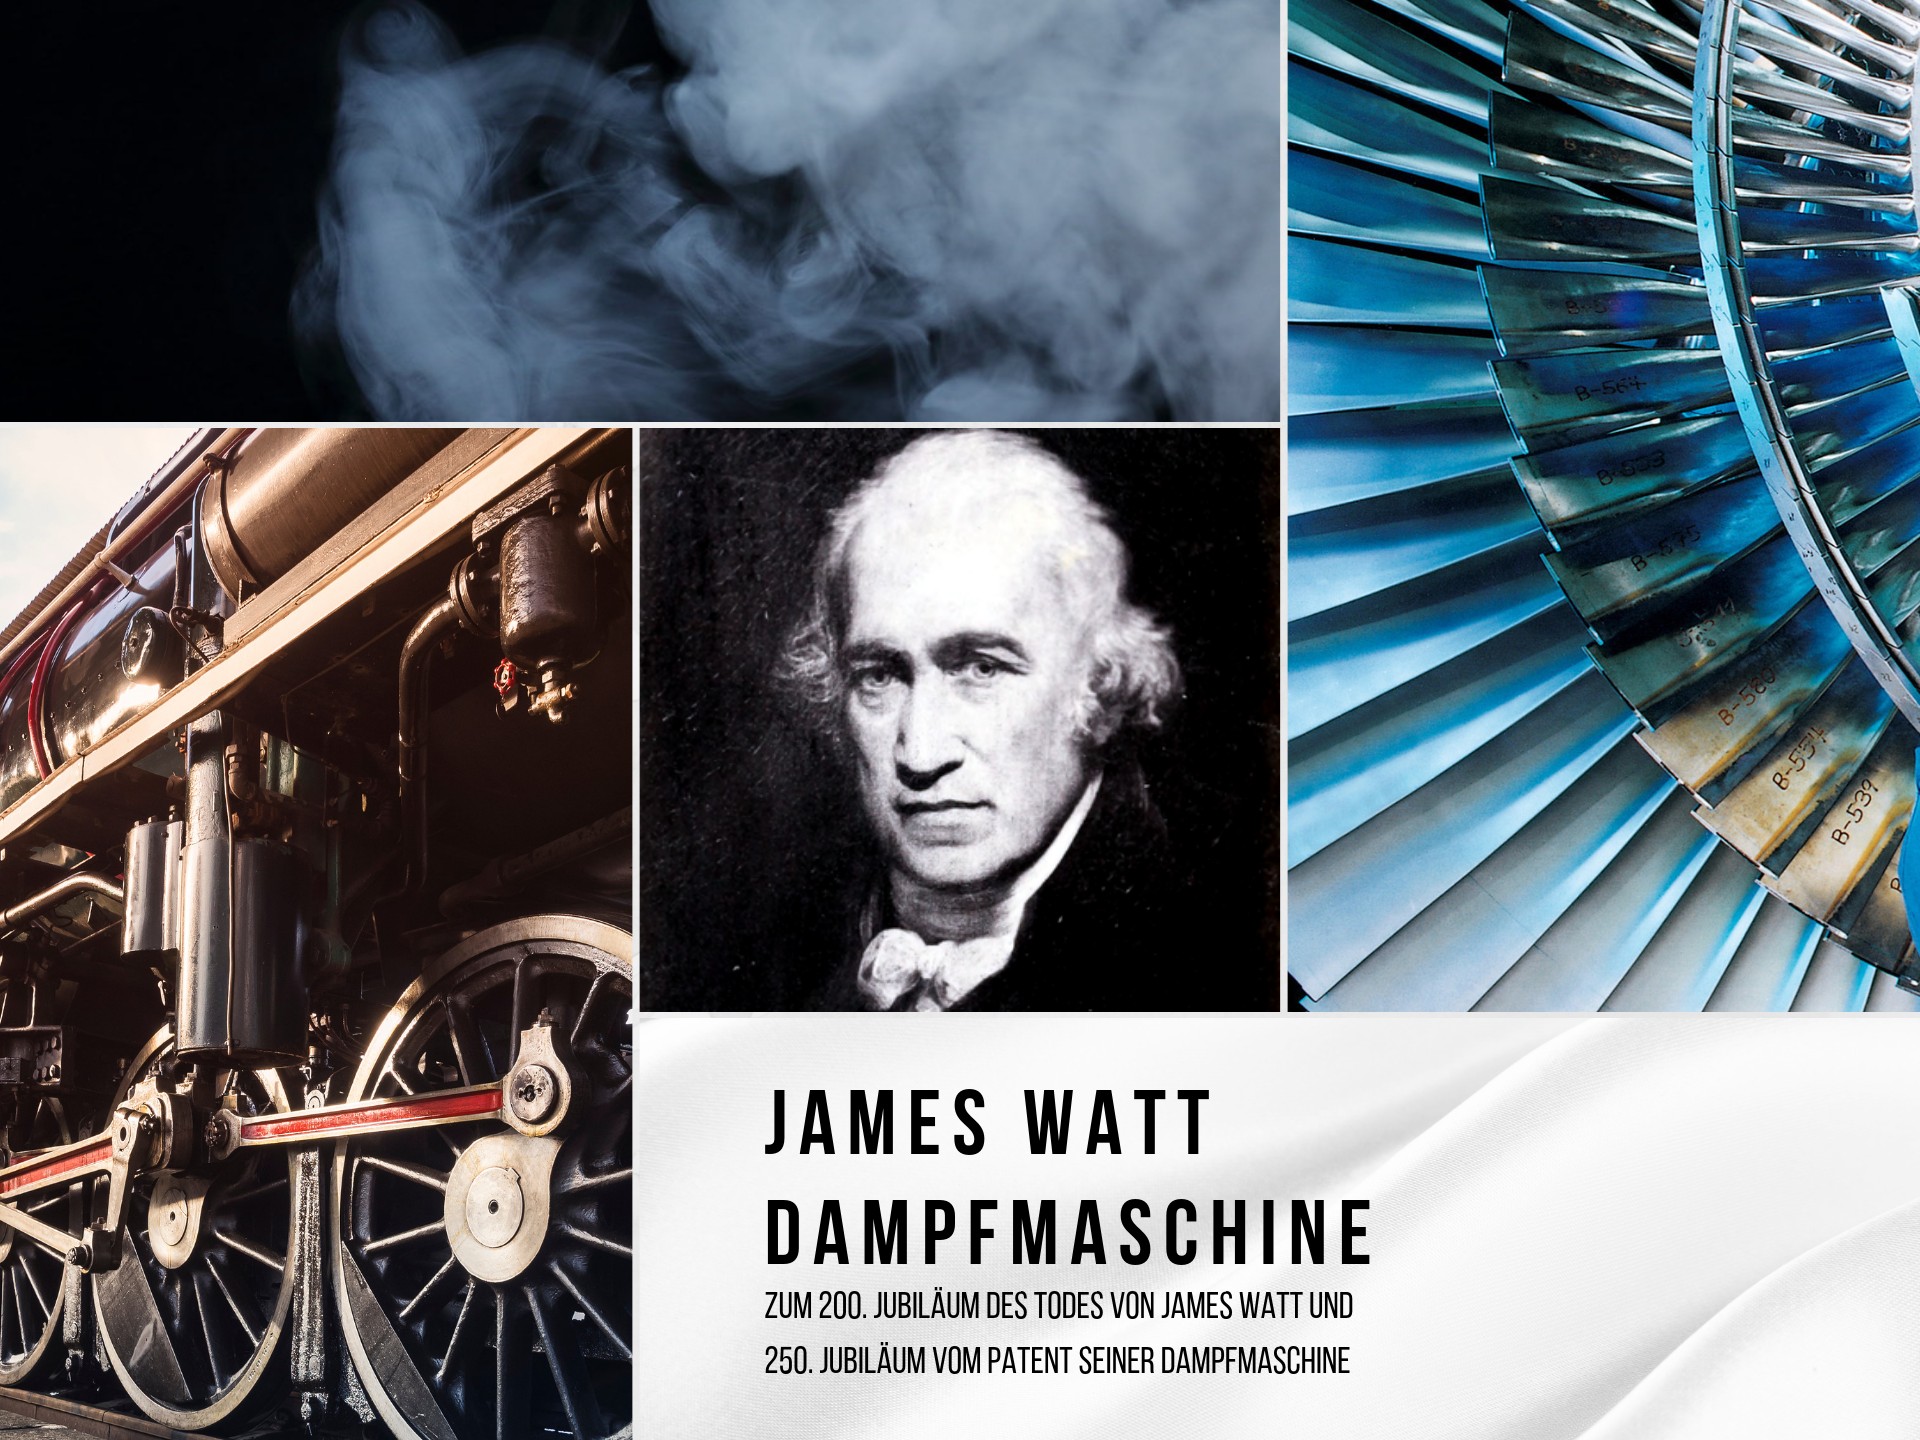 James watt and the steam фото 22